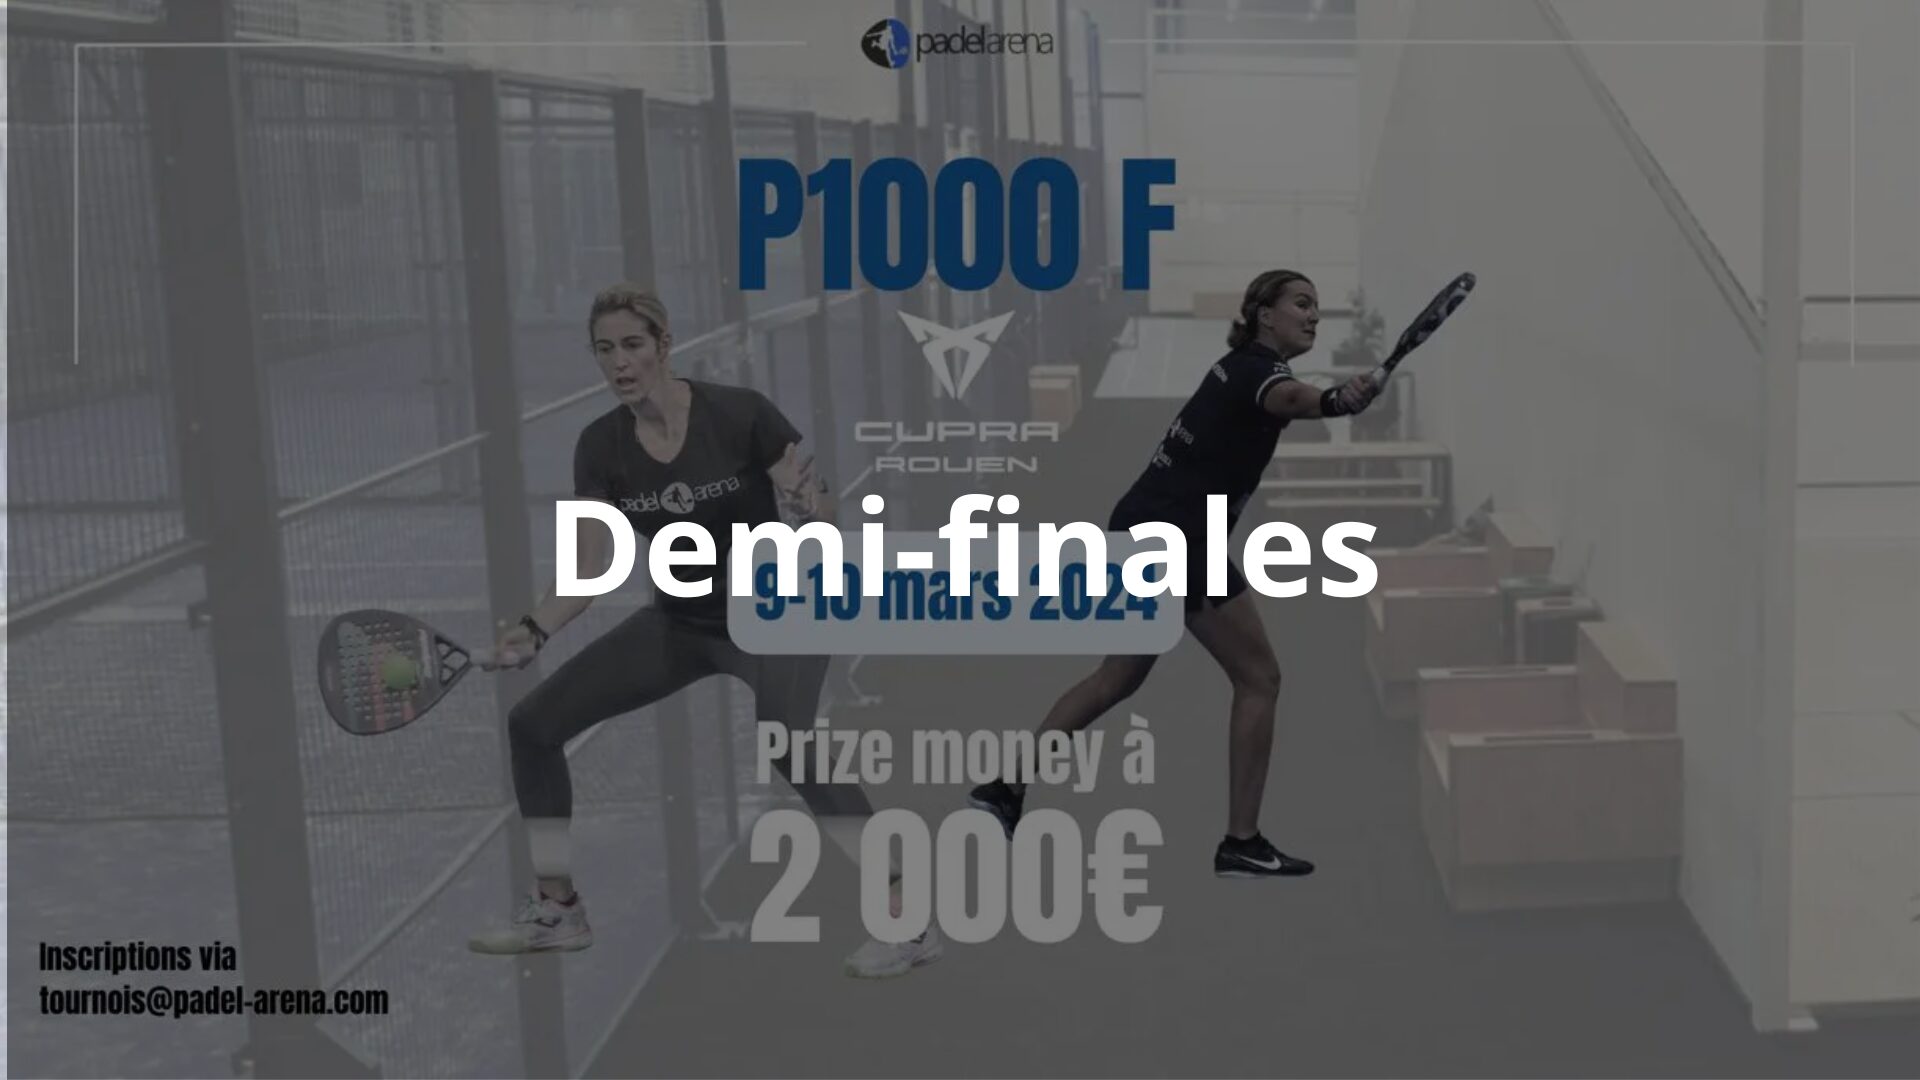 P1000 Padel Arena Cupra Rouen – Start af semifinalerne live!